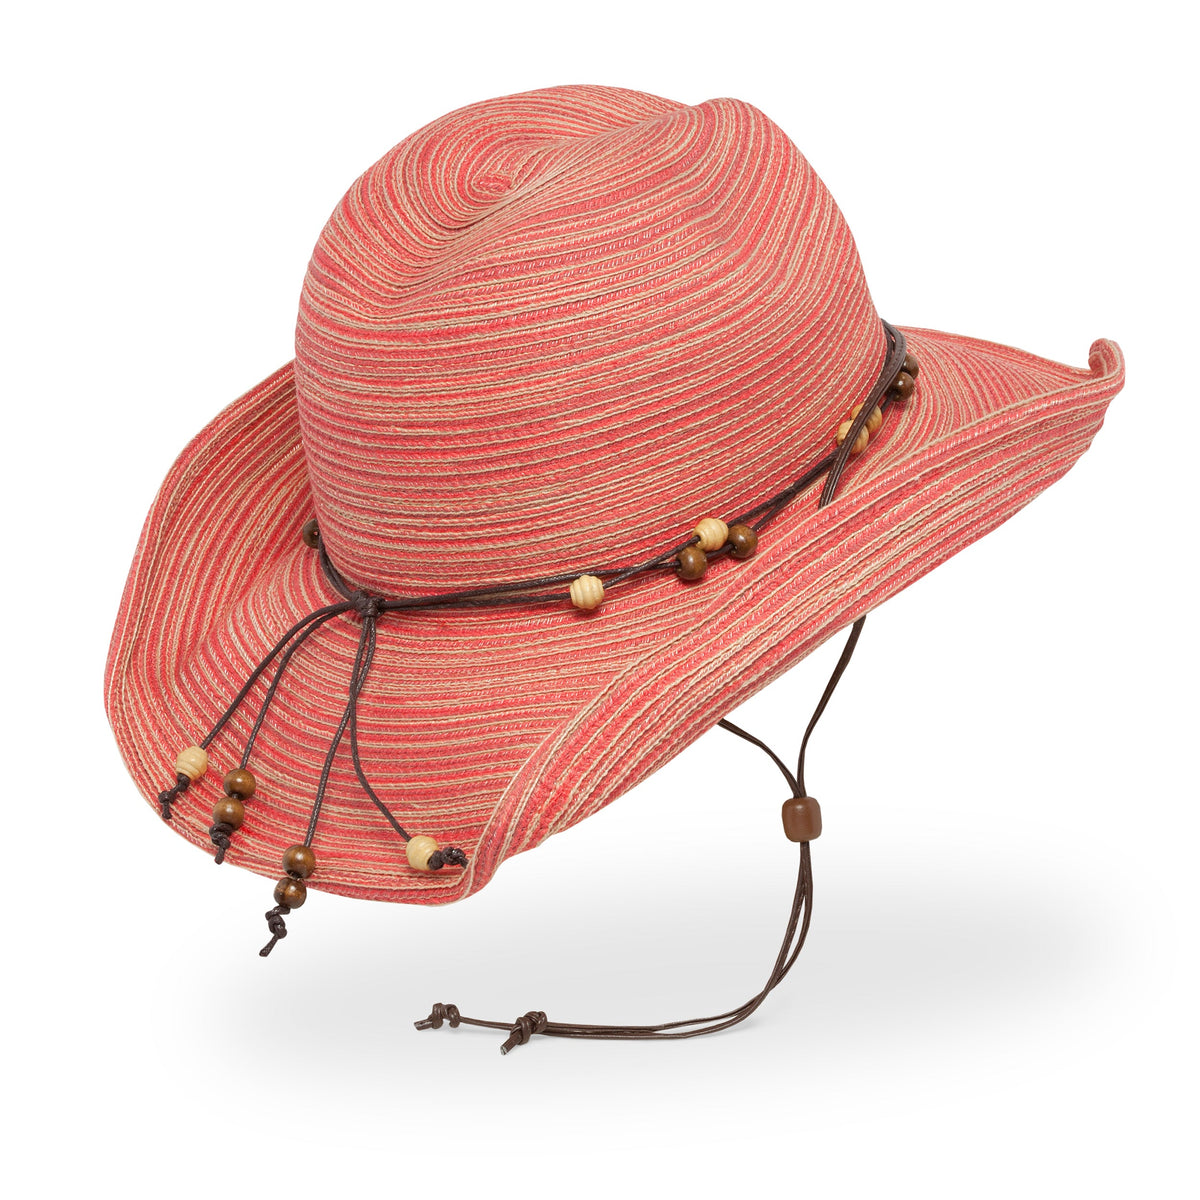 UV Sun hat women summer hat, Elastic back, Watermelon Red w